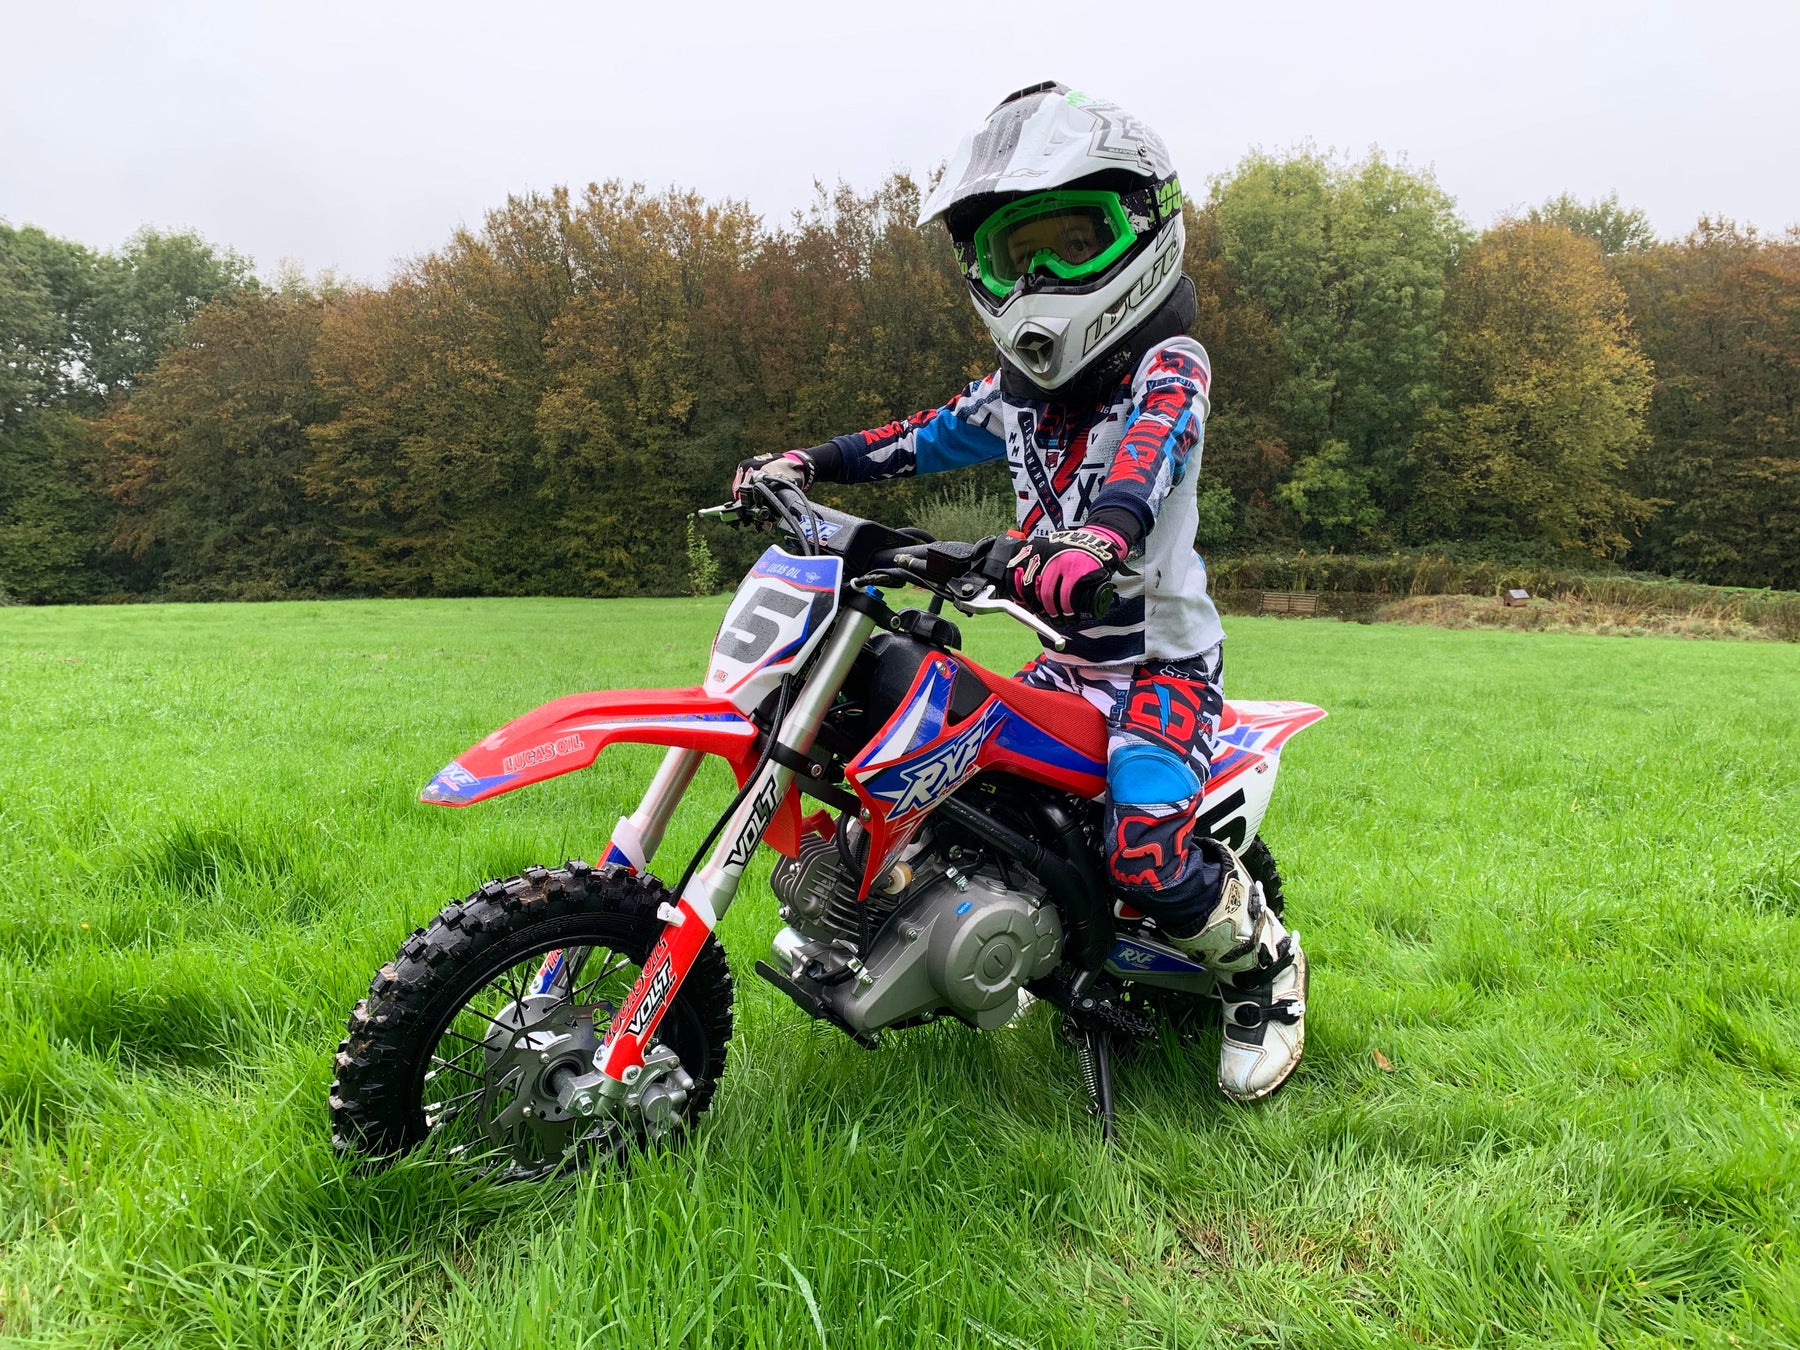 Boy aged 6 riding the RXF60cc Mini Dirt Bike on a field of grass